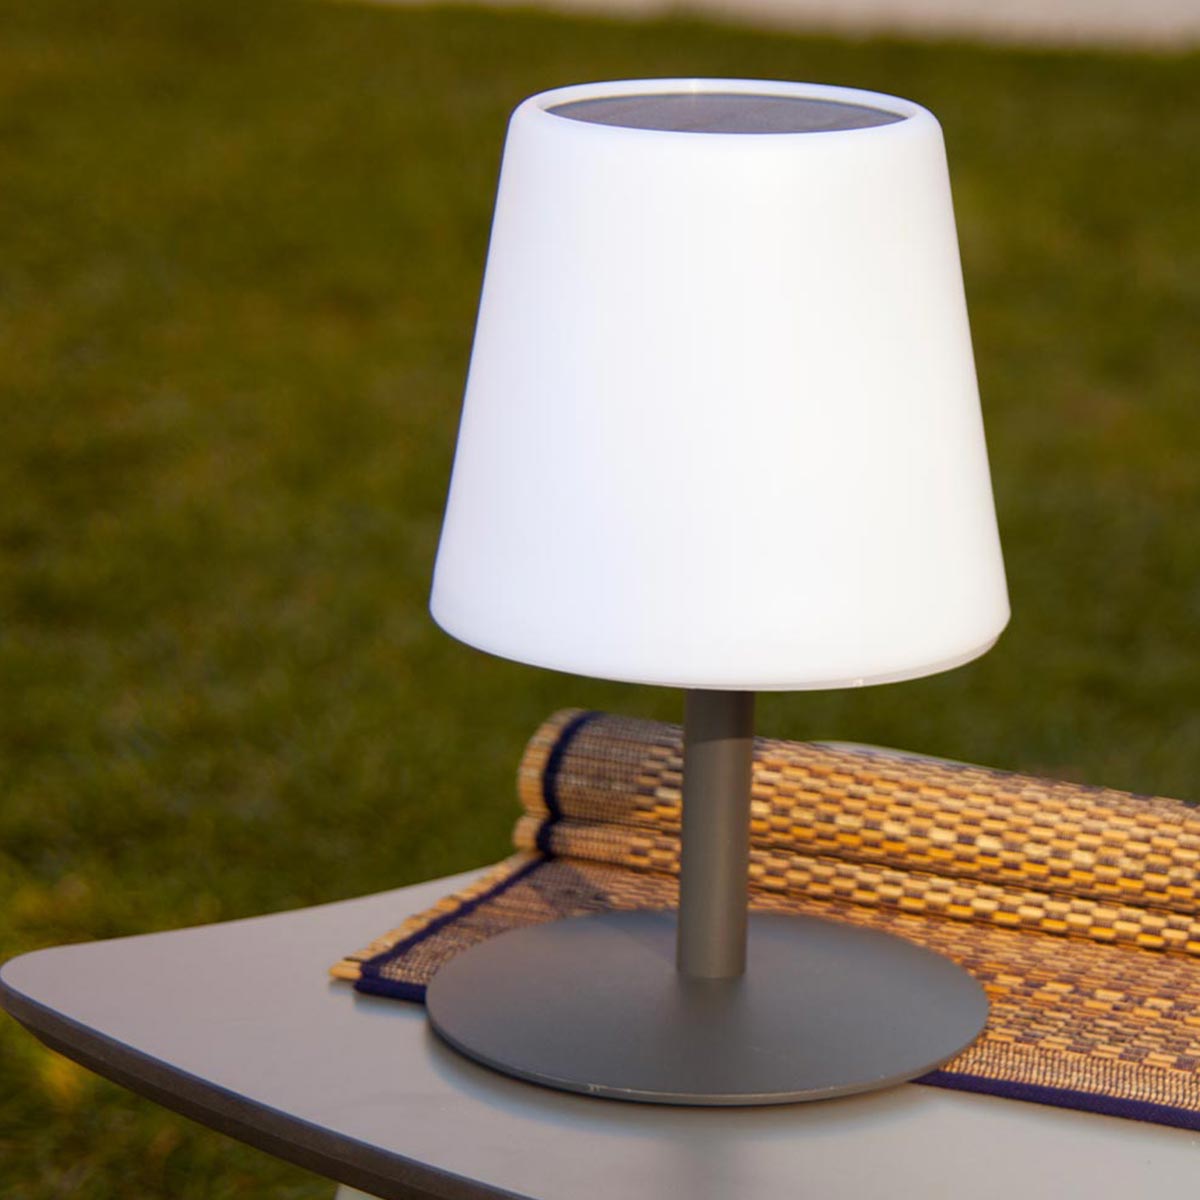 Lampe de table solaire et rechargeable LED blanc chaud/blanc dimmable STANDY TINY SOLAR H25cm - REDDECO.com